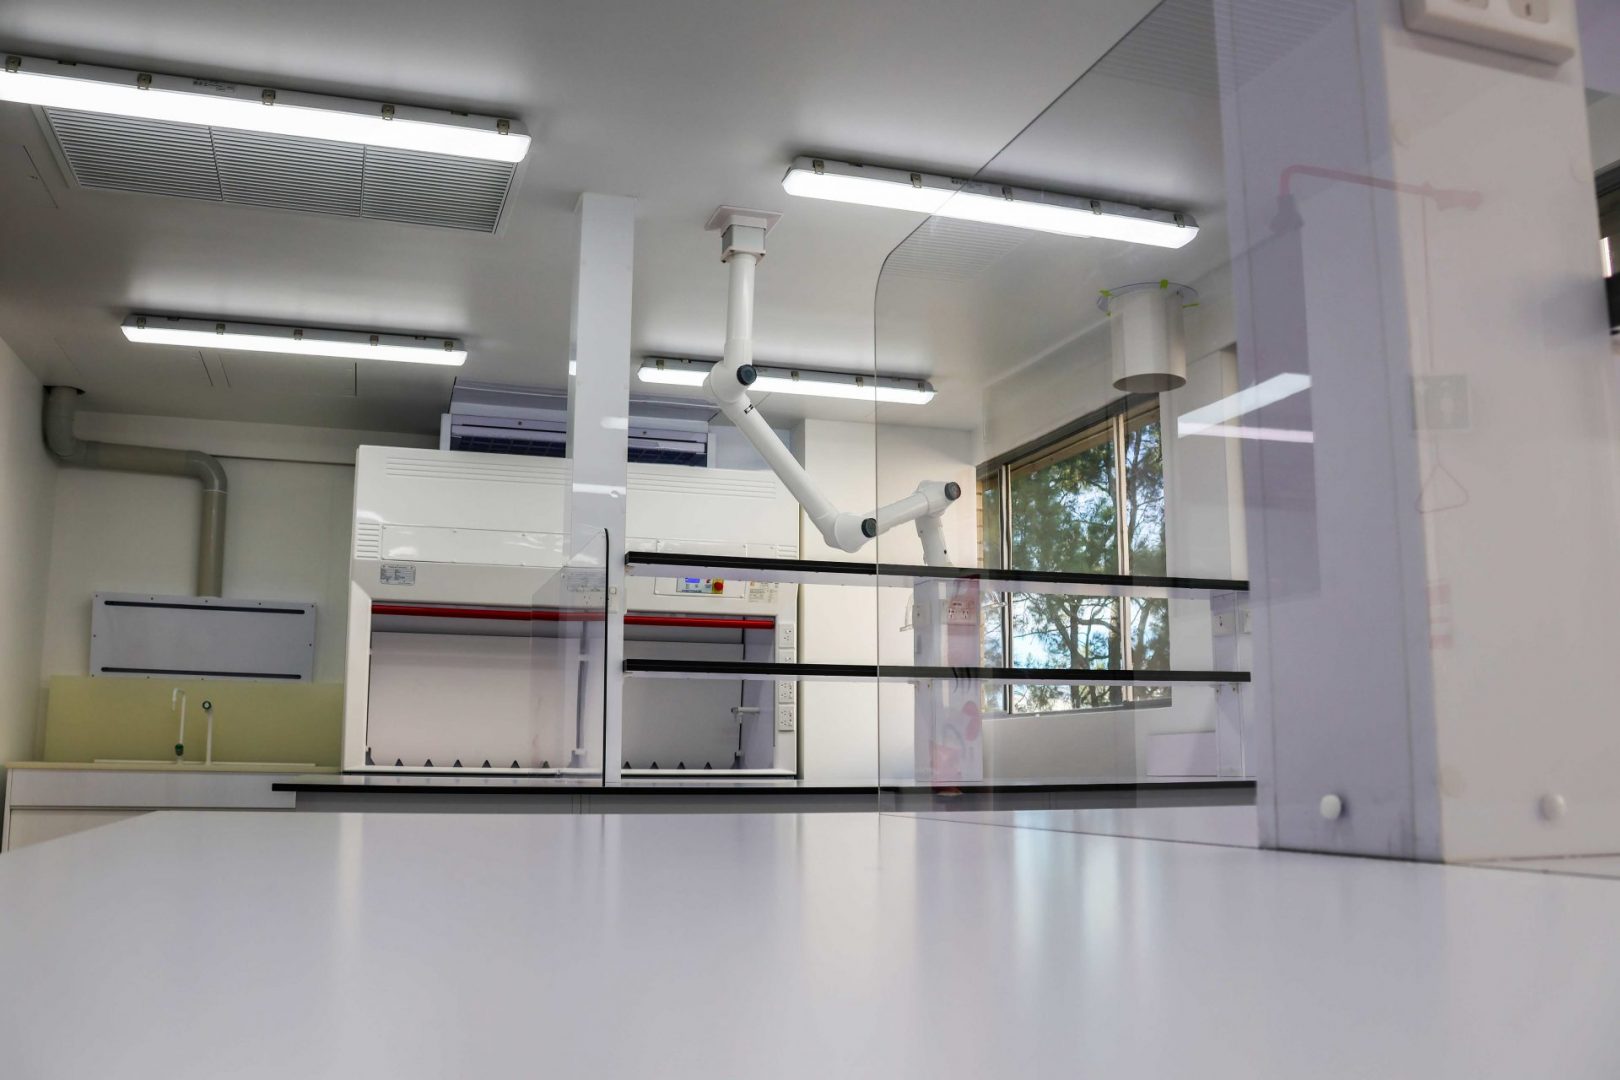 Sydney Head Laboratory Refurbishment in Chatswood - Envirolab Services